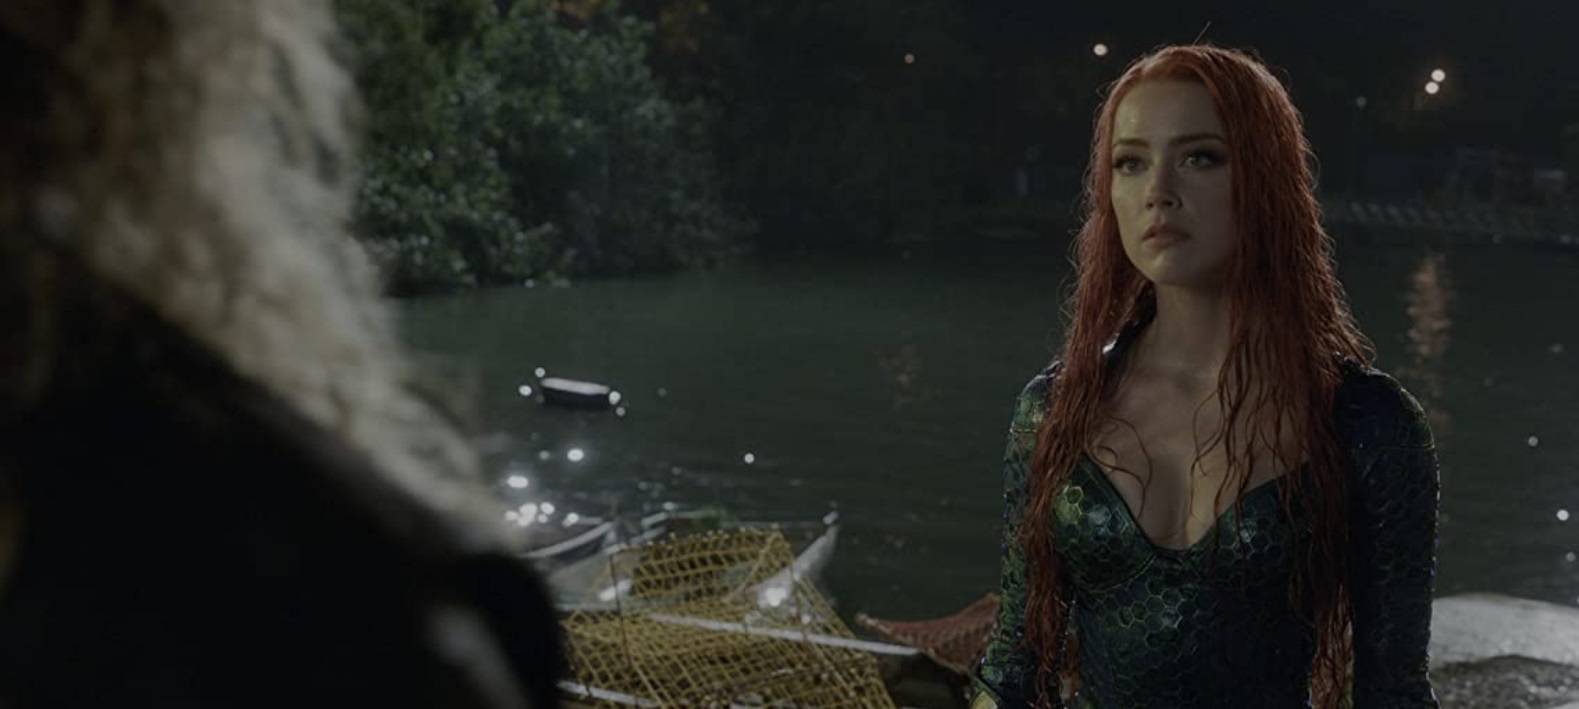 Amber Heard izbacili iz novoga trailera za film 'Aquaman'